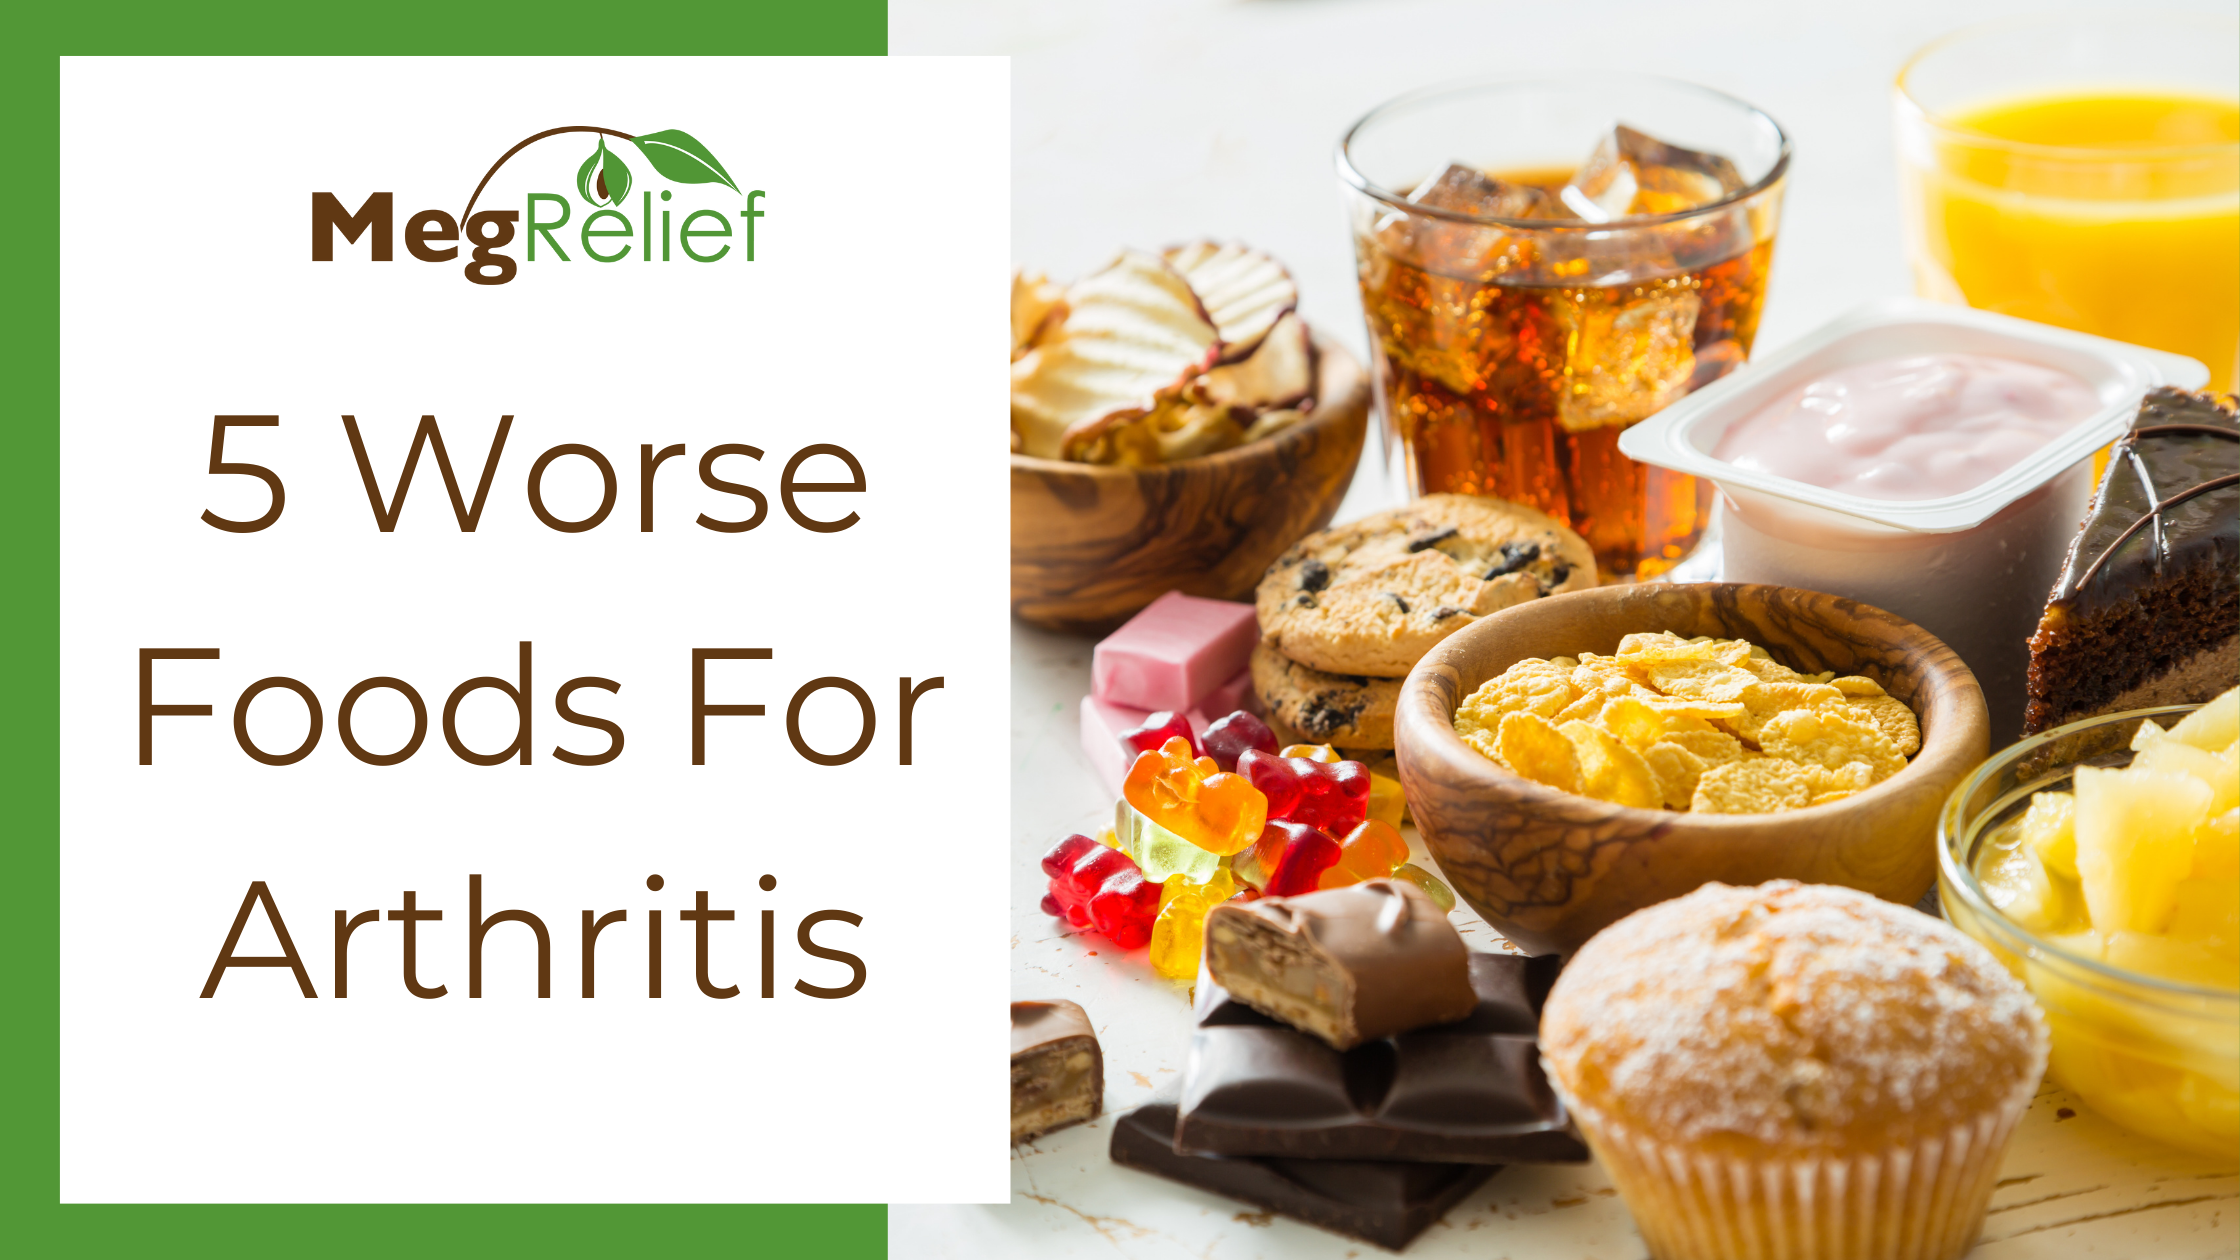 5 Worse Foods For Arthritis